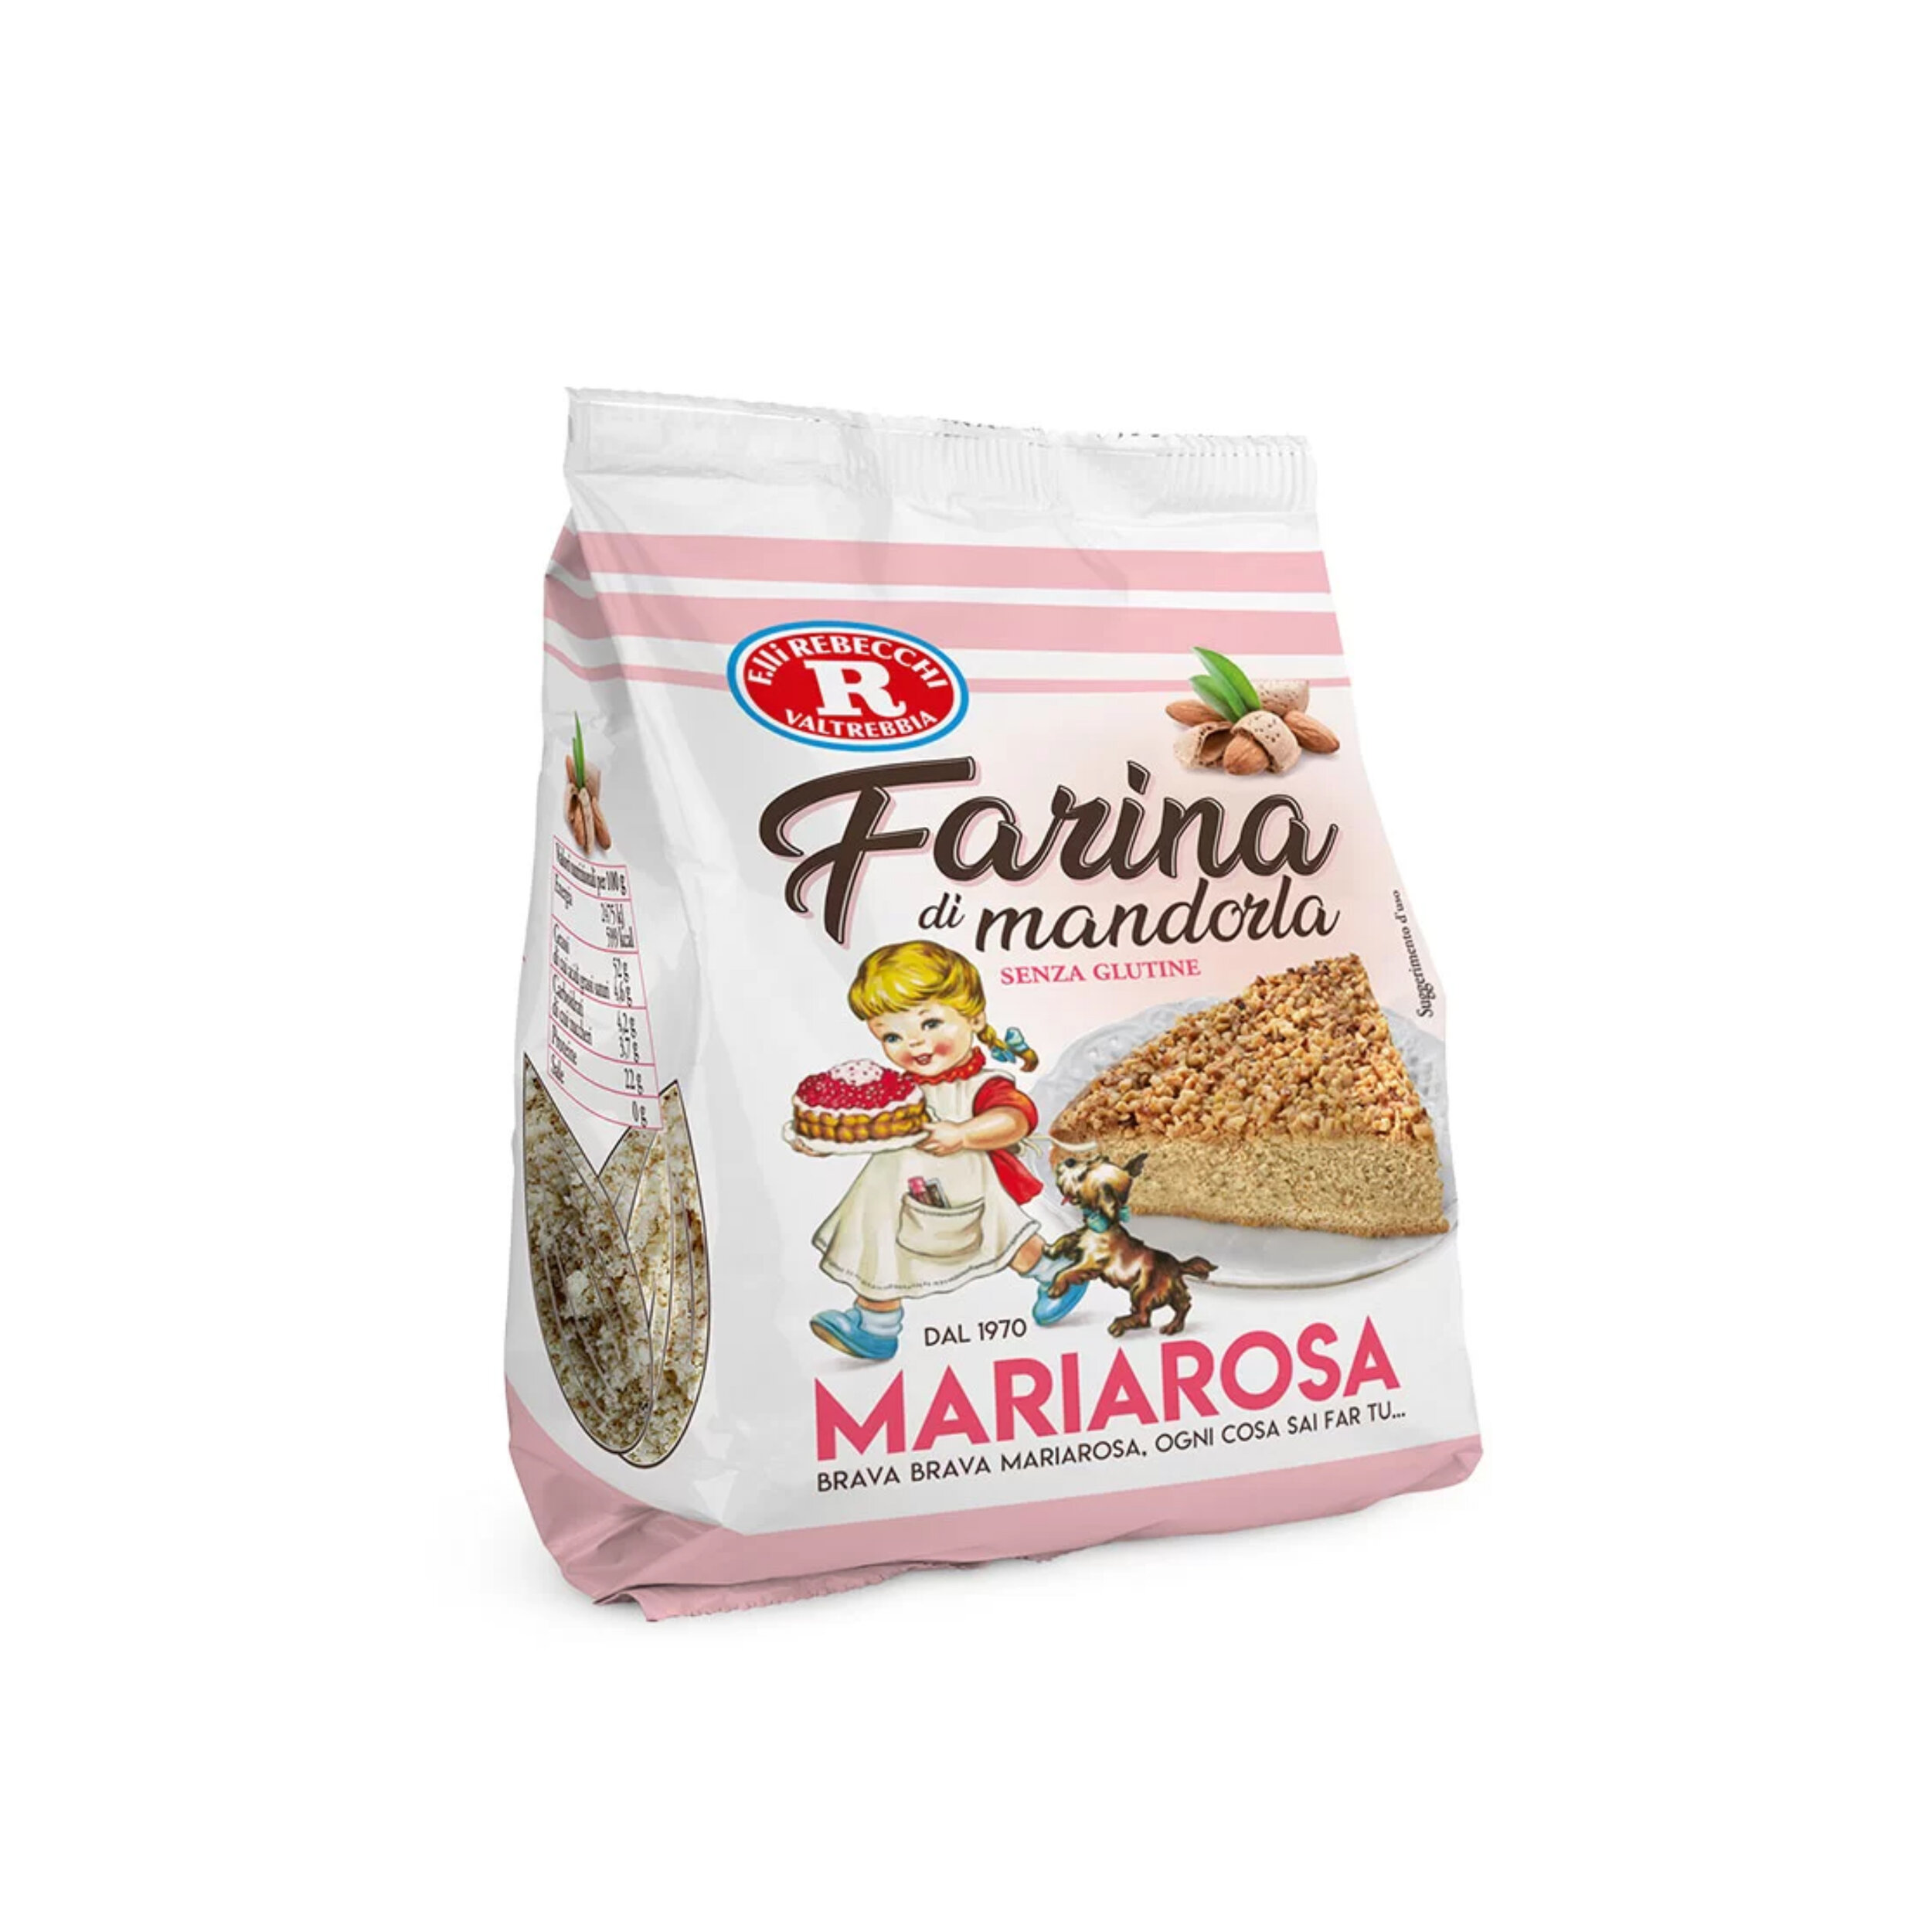 MA2917 Mariarosa Almond Flour.jpg